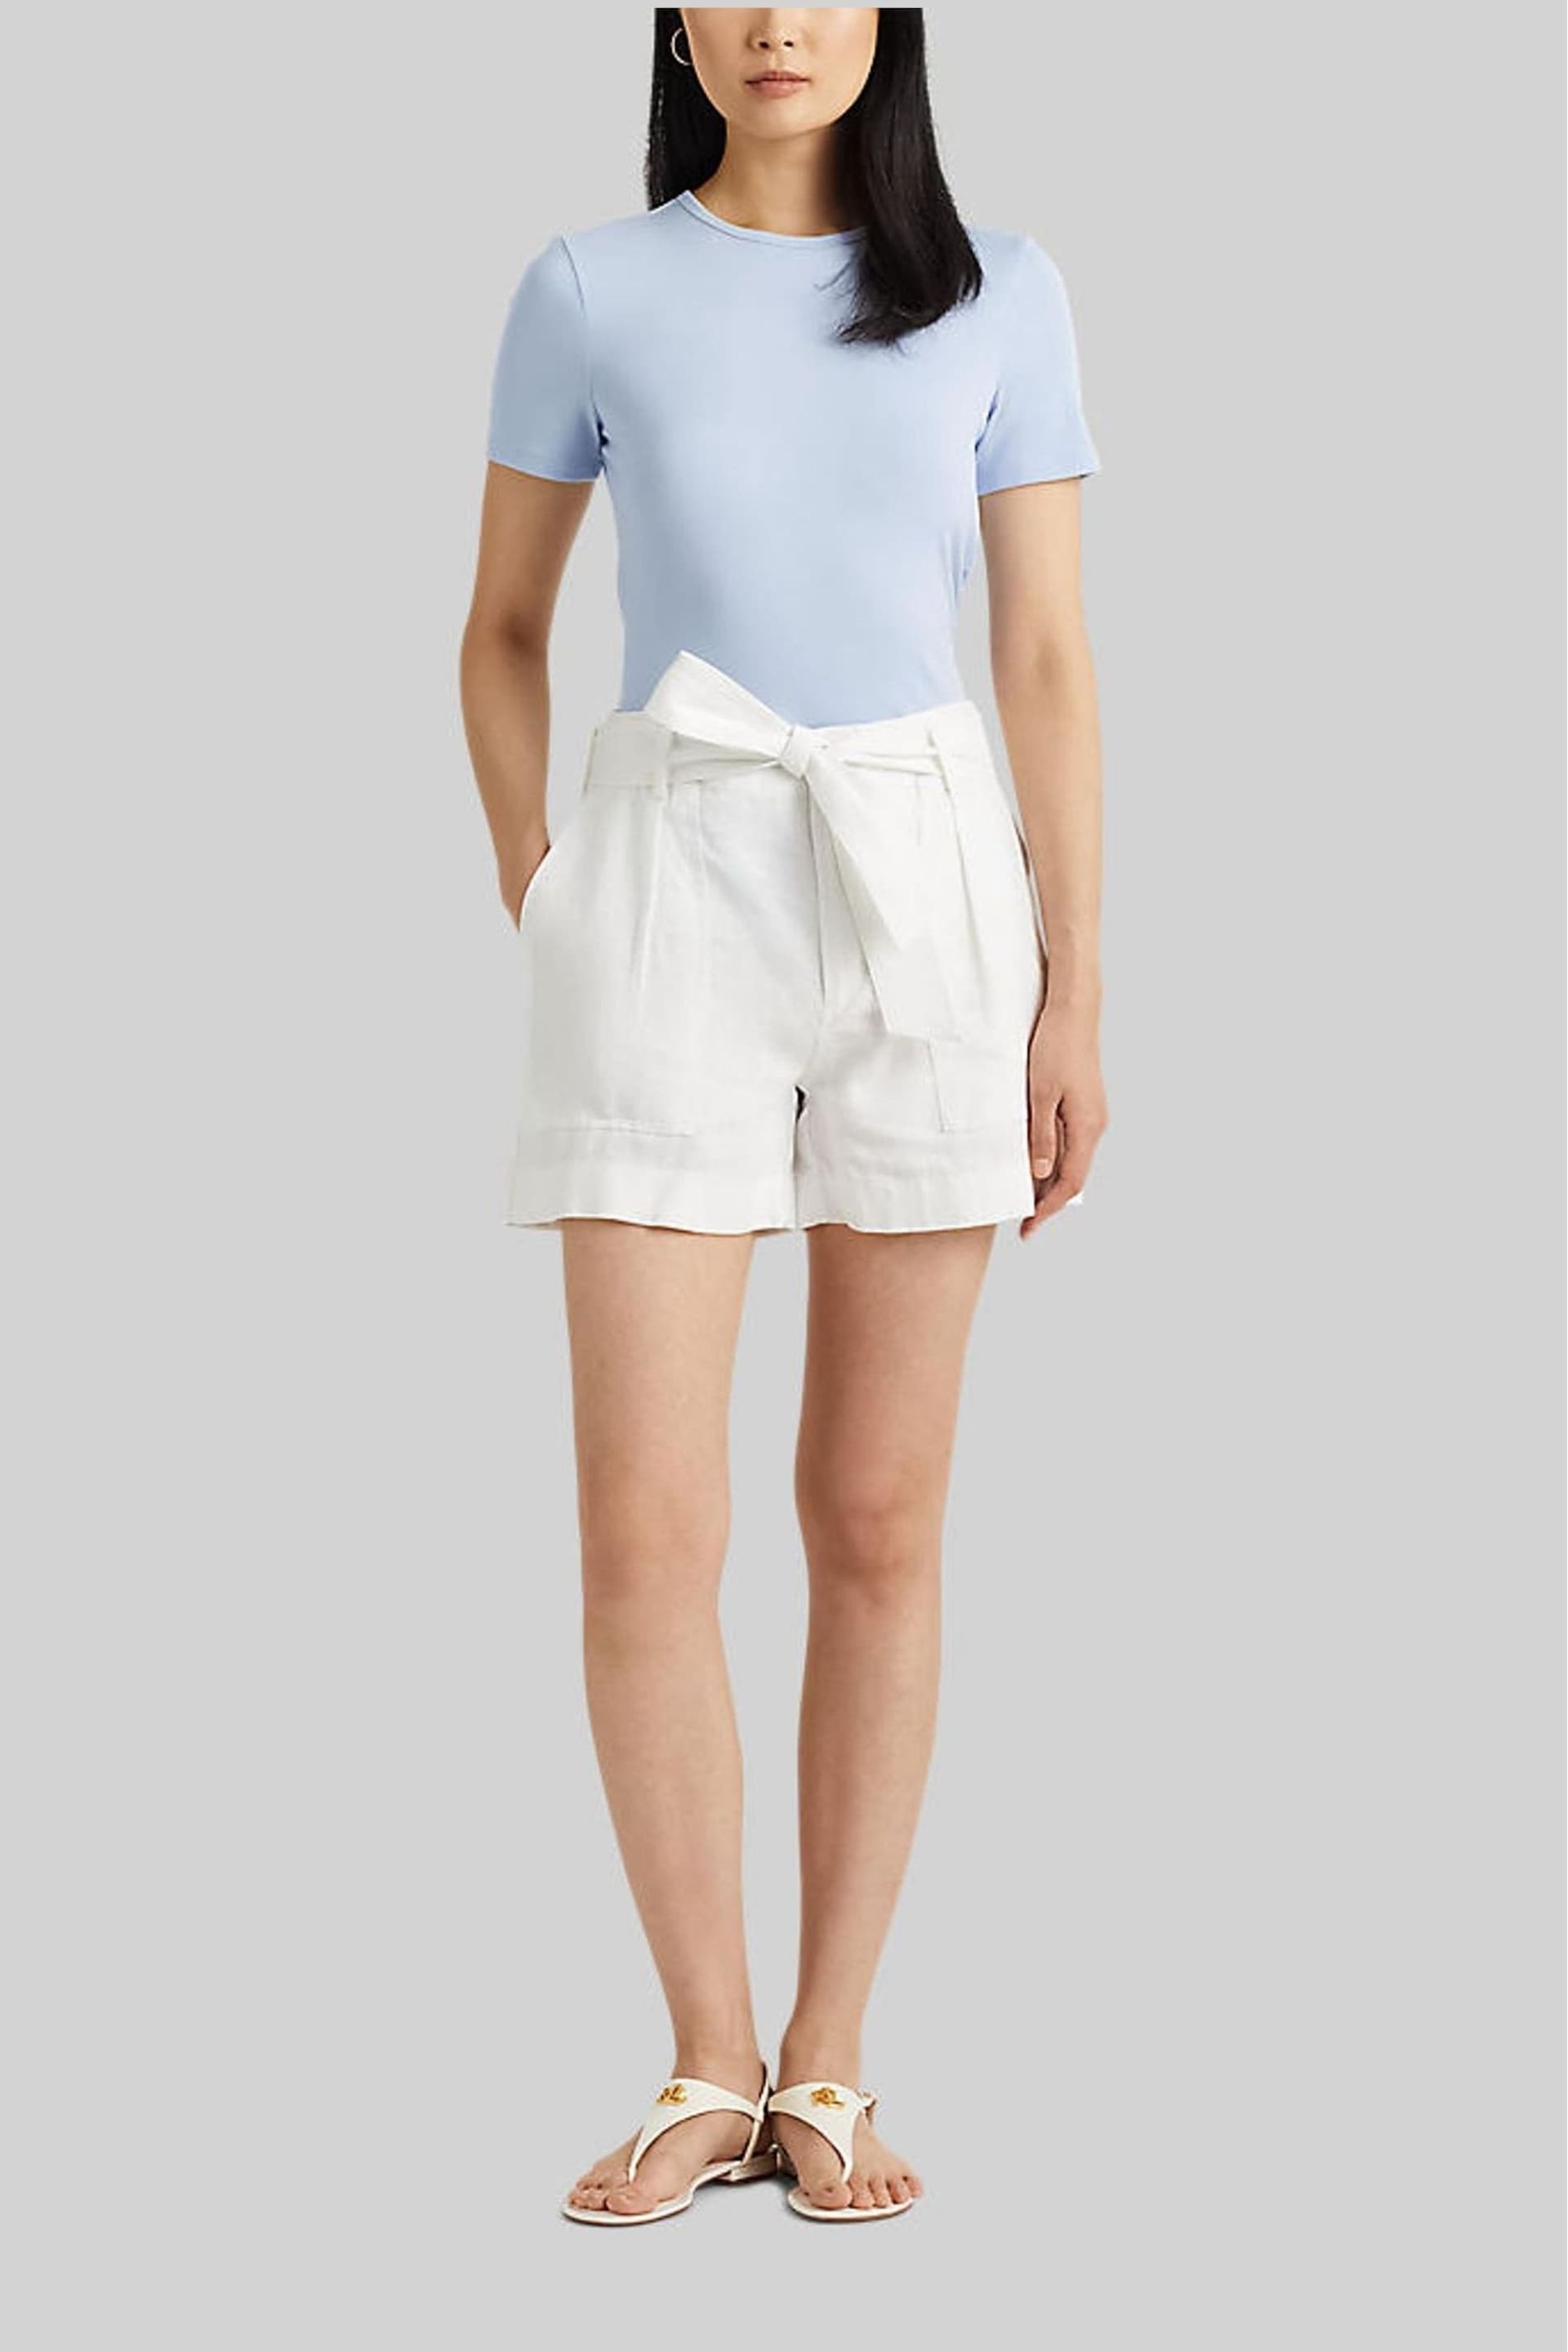 Lauren Ralph Lauren Daviana Soft Drape Linen Tie Waist Shorts - Image 4 of 6